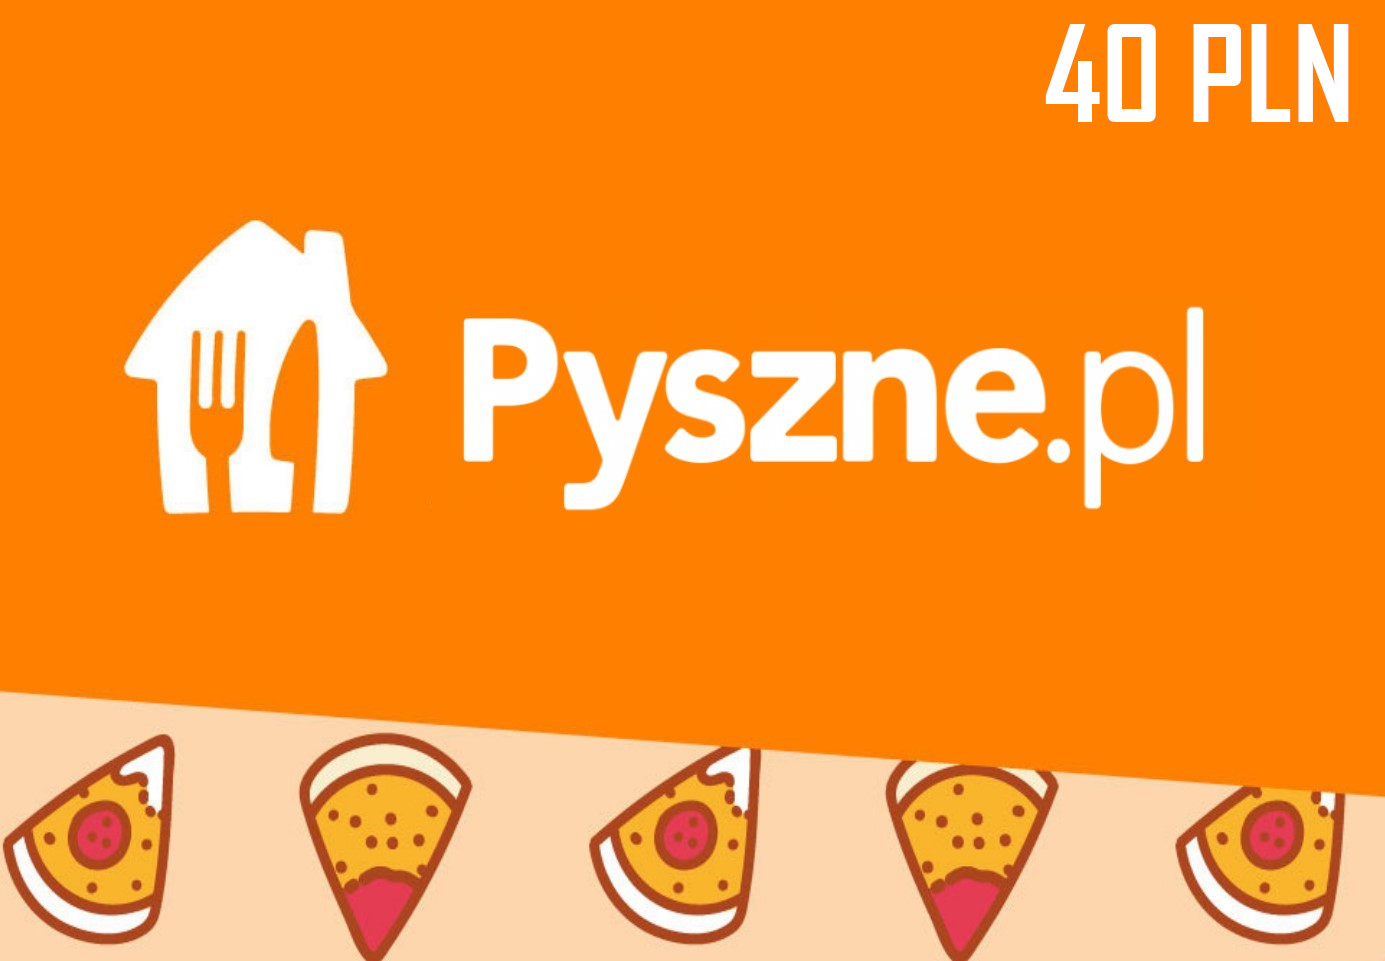 Pyszne.pl 40 PLN Gift Card PL 11.82 usd